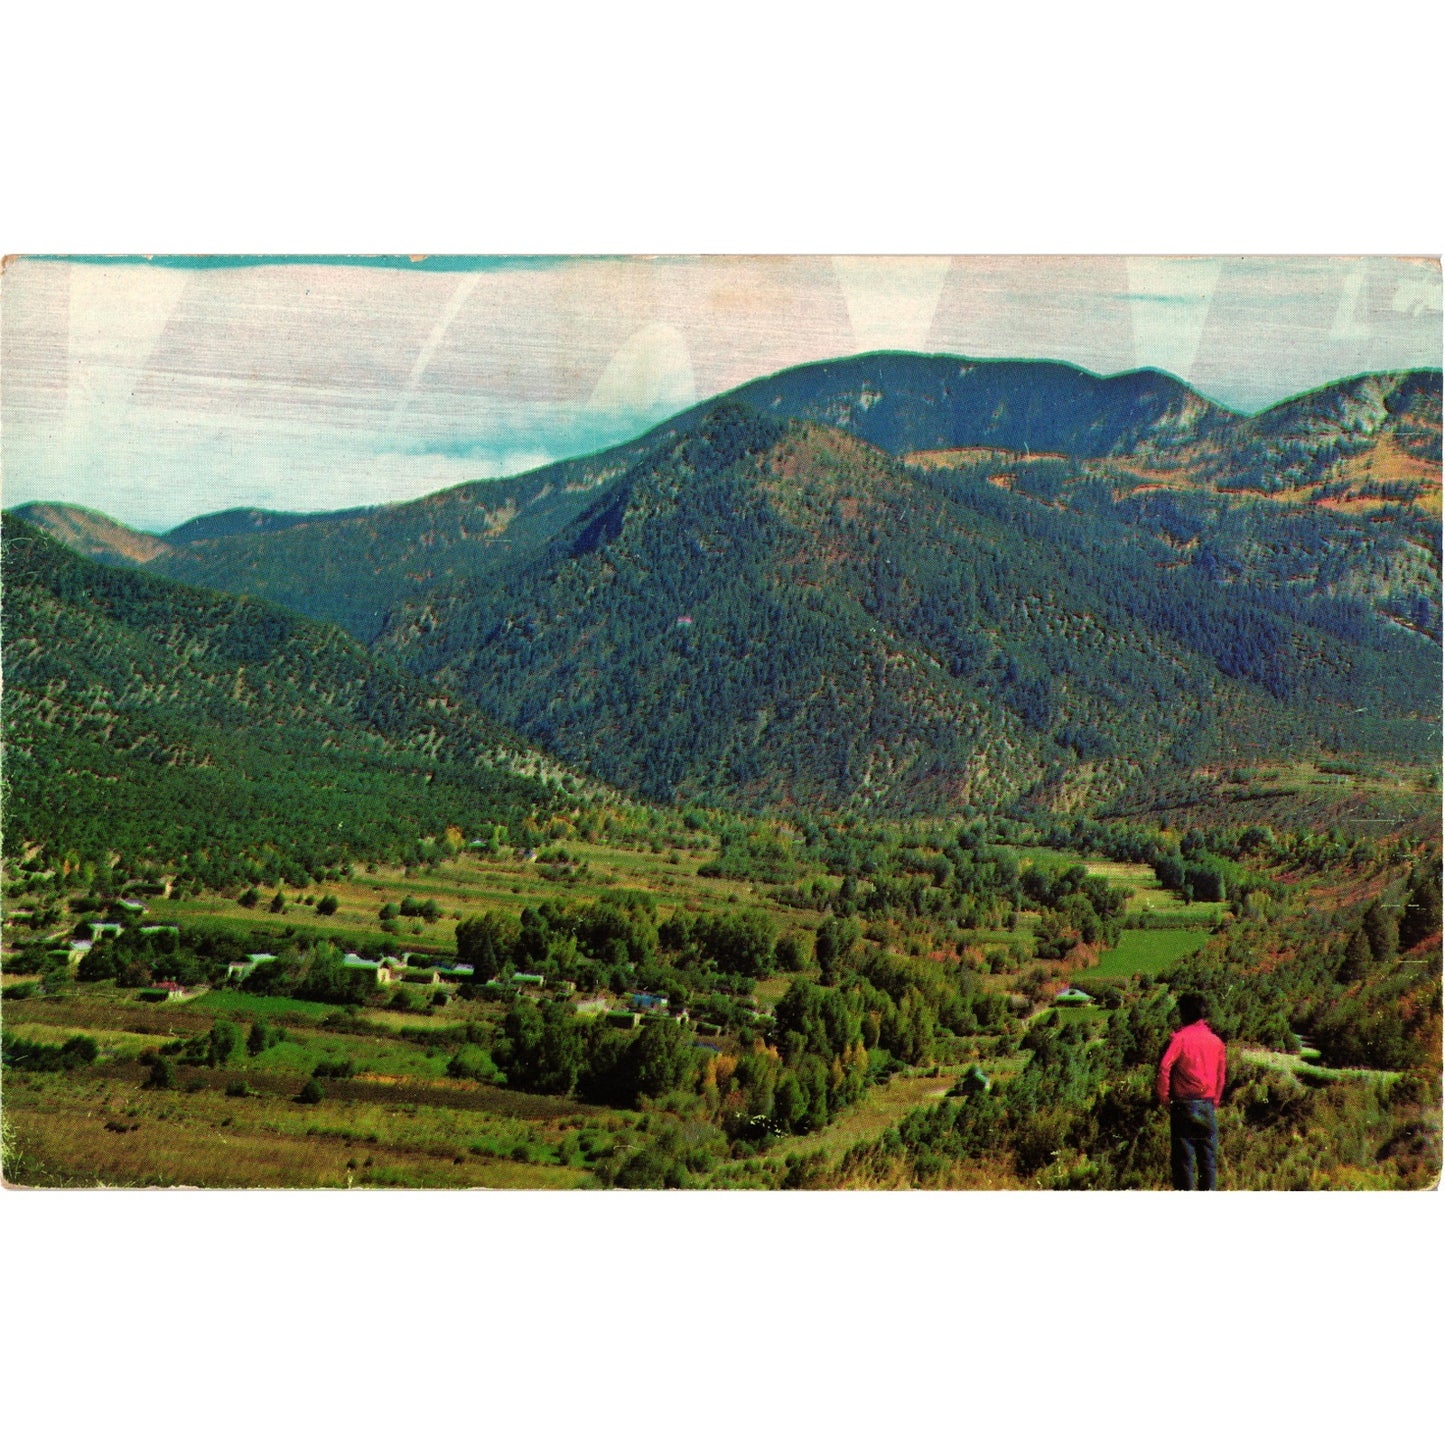 Village of Valdez New Mexico Postcard Unposted